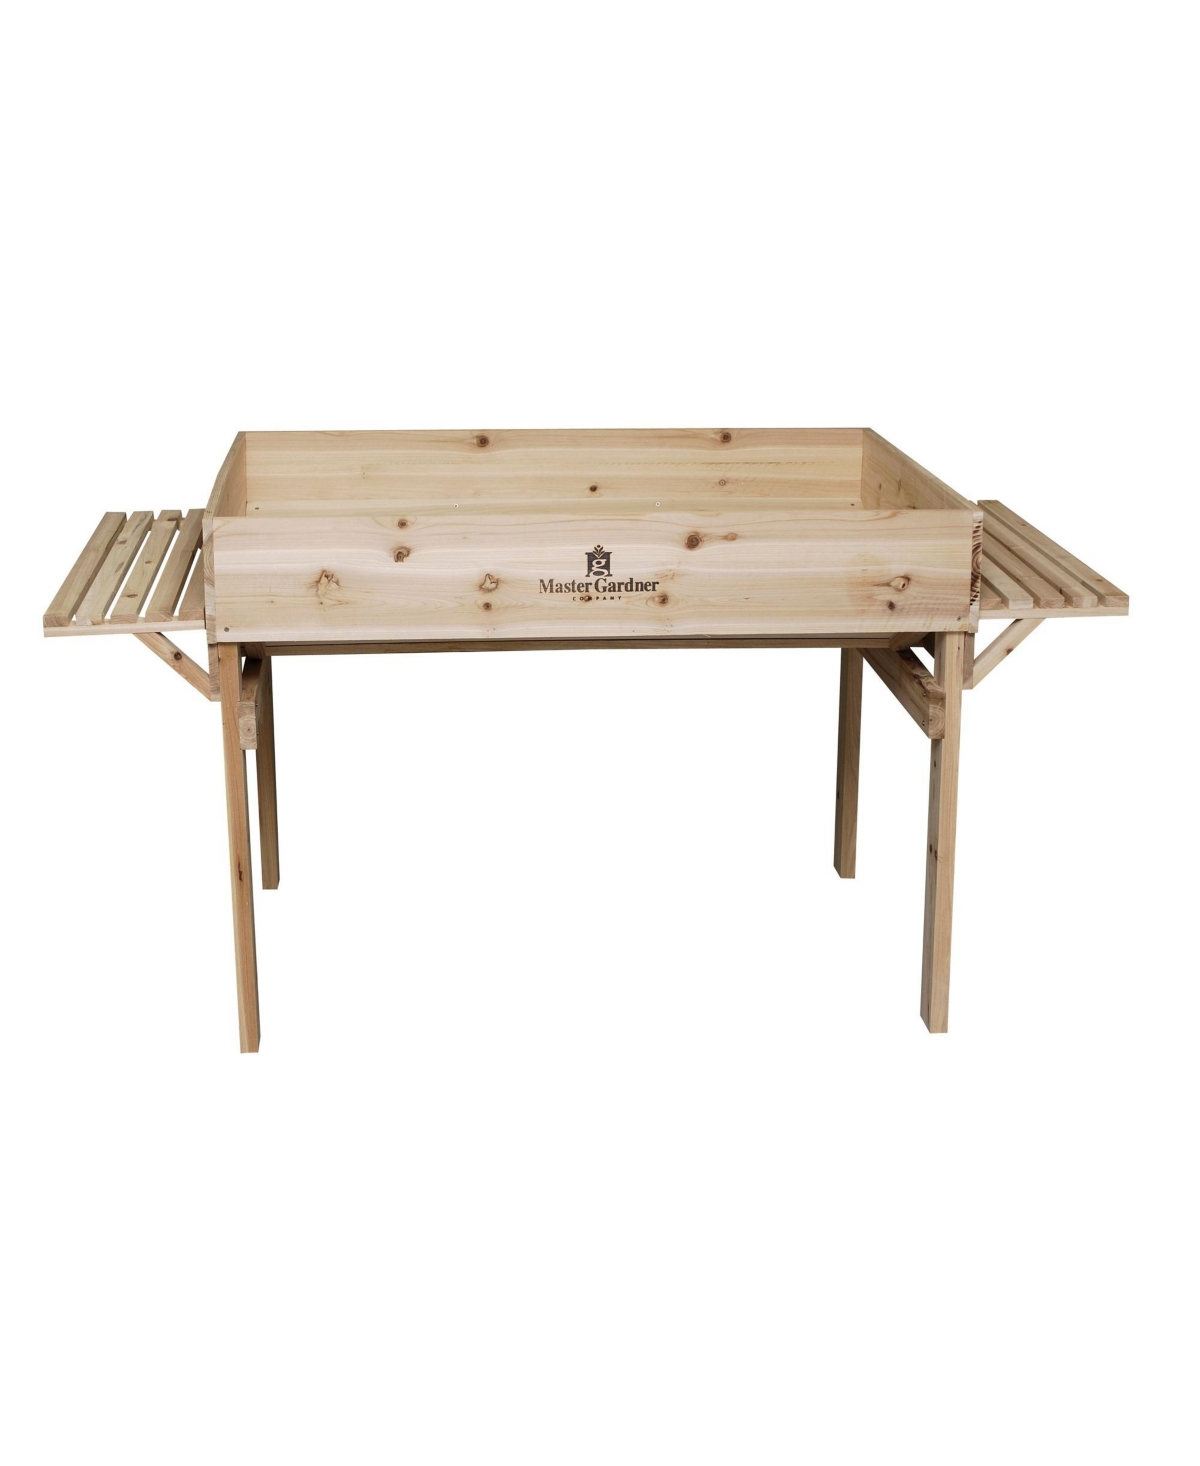 Master Gardner Raised Bed Garden Table, Light Brown Wood, 3 x 4 ft - Brown